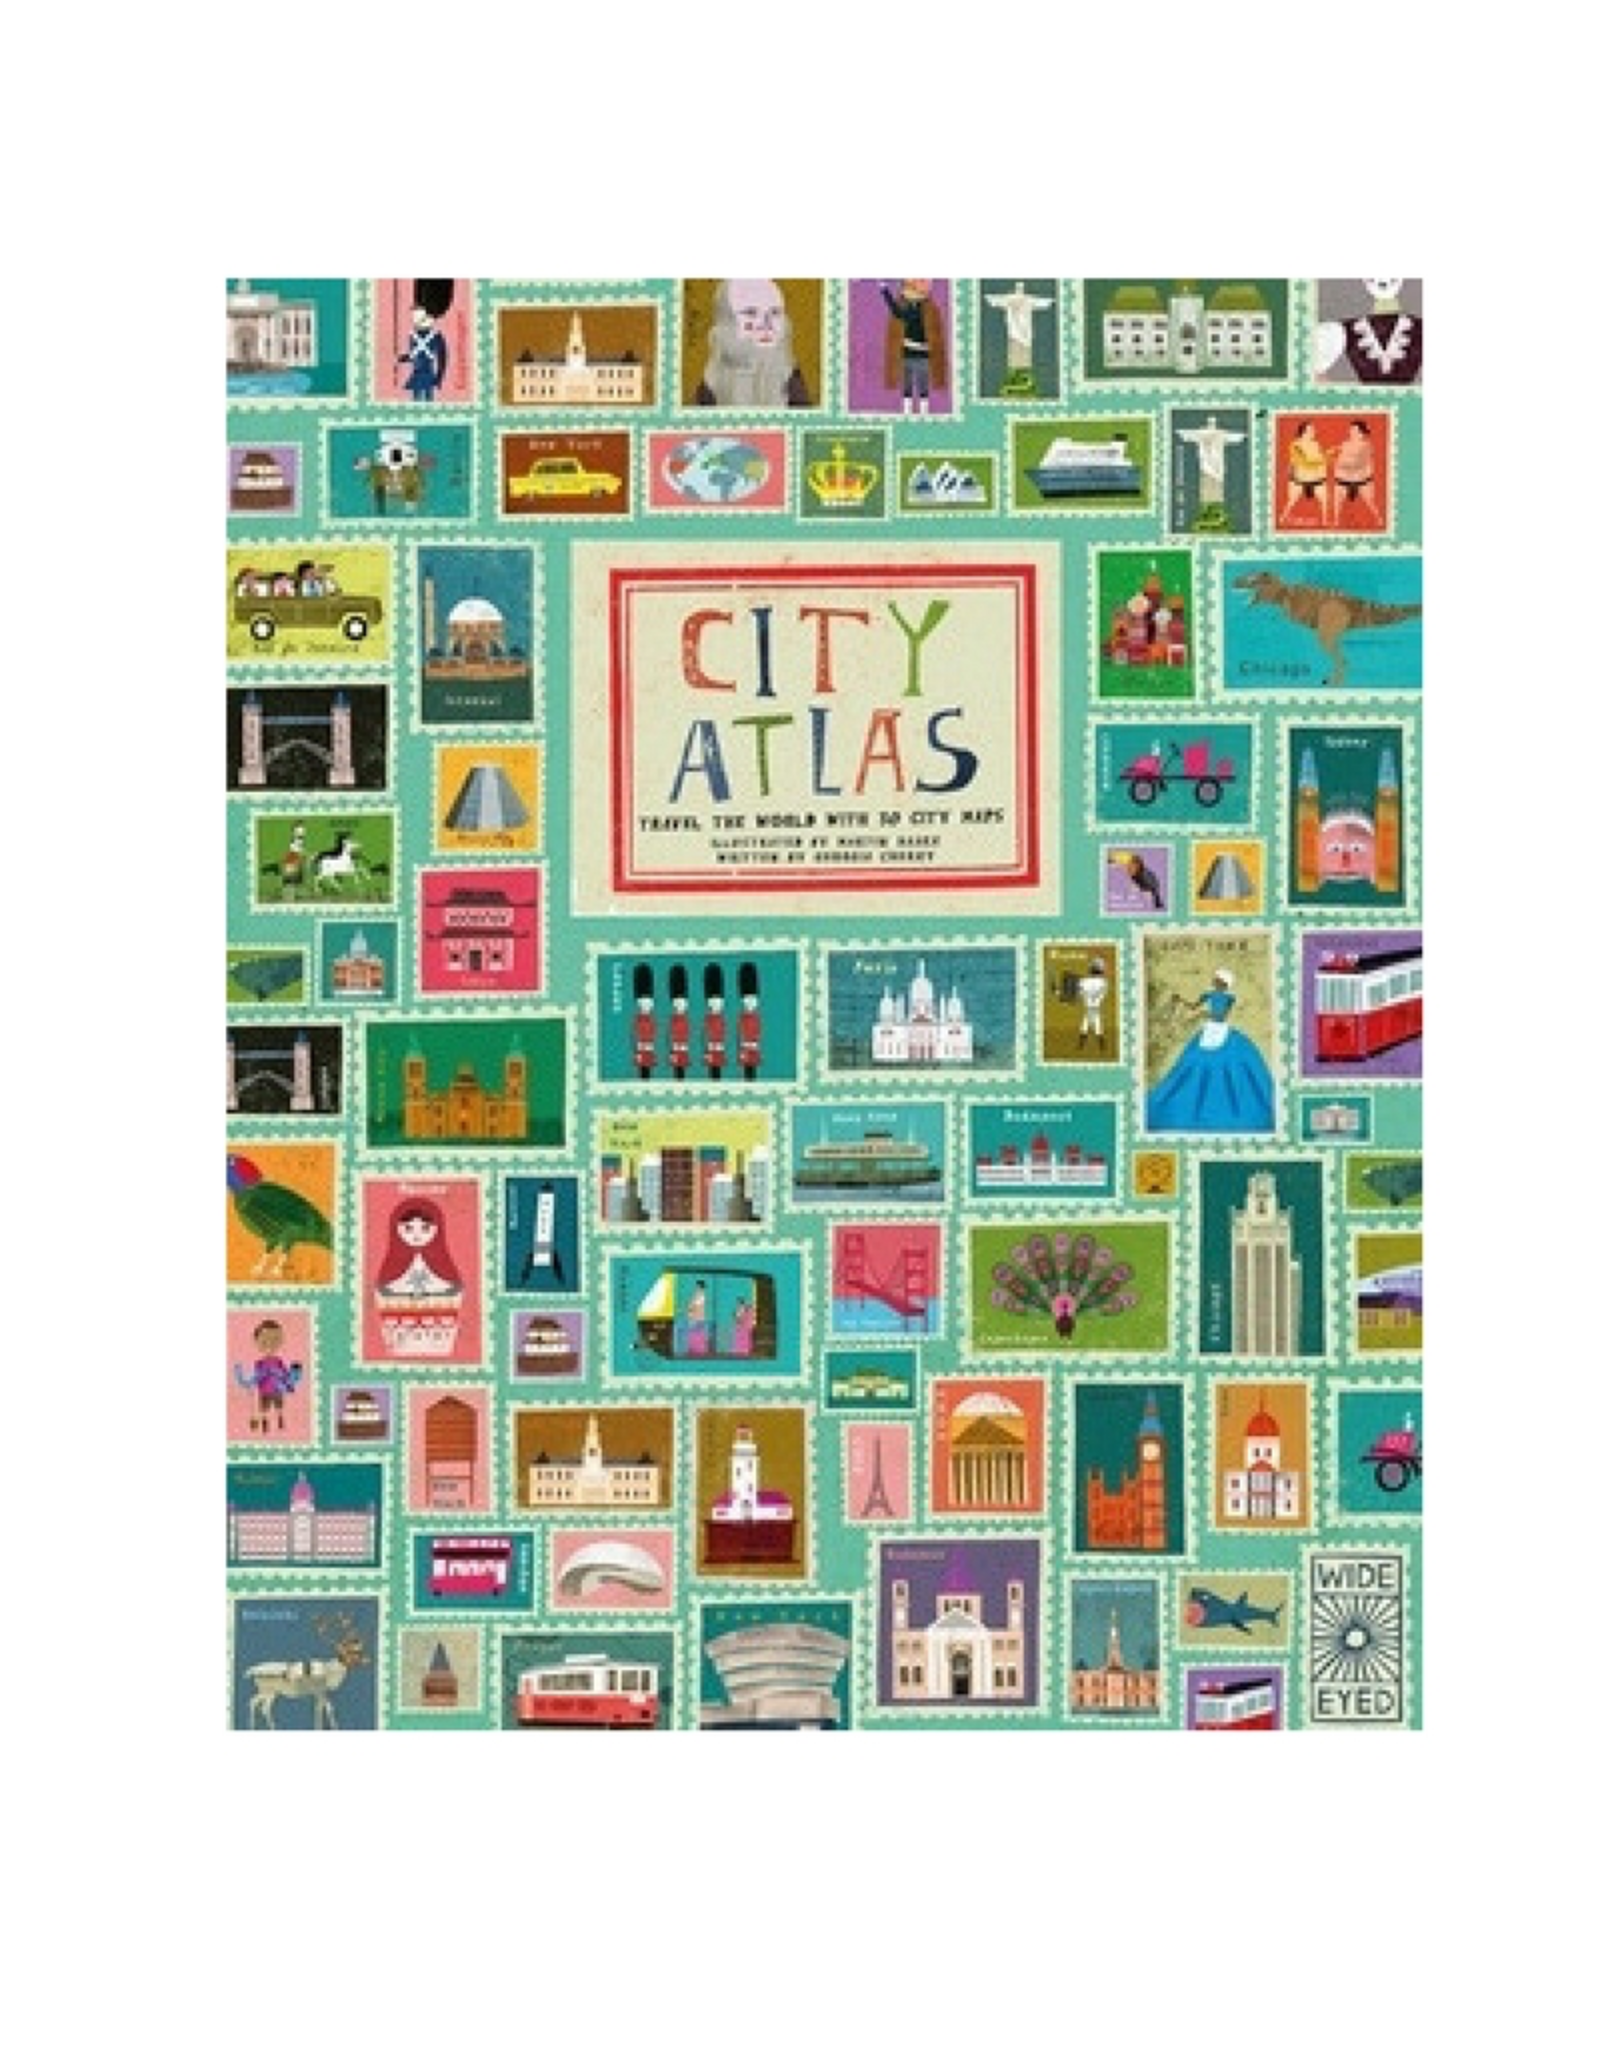 City Atlas by Martin Haake